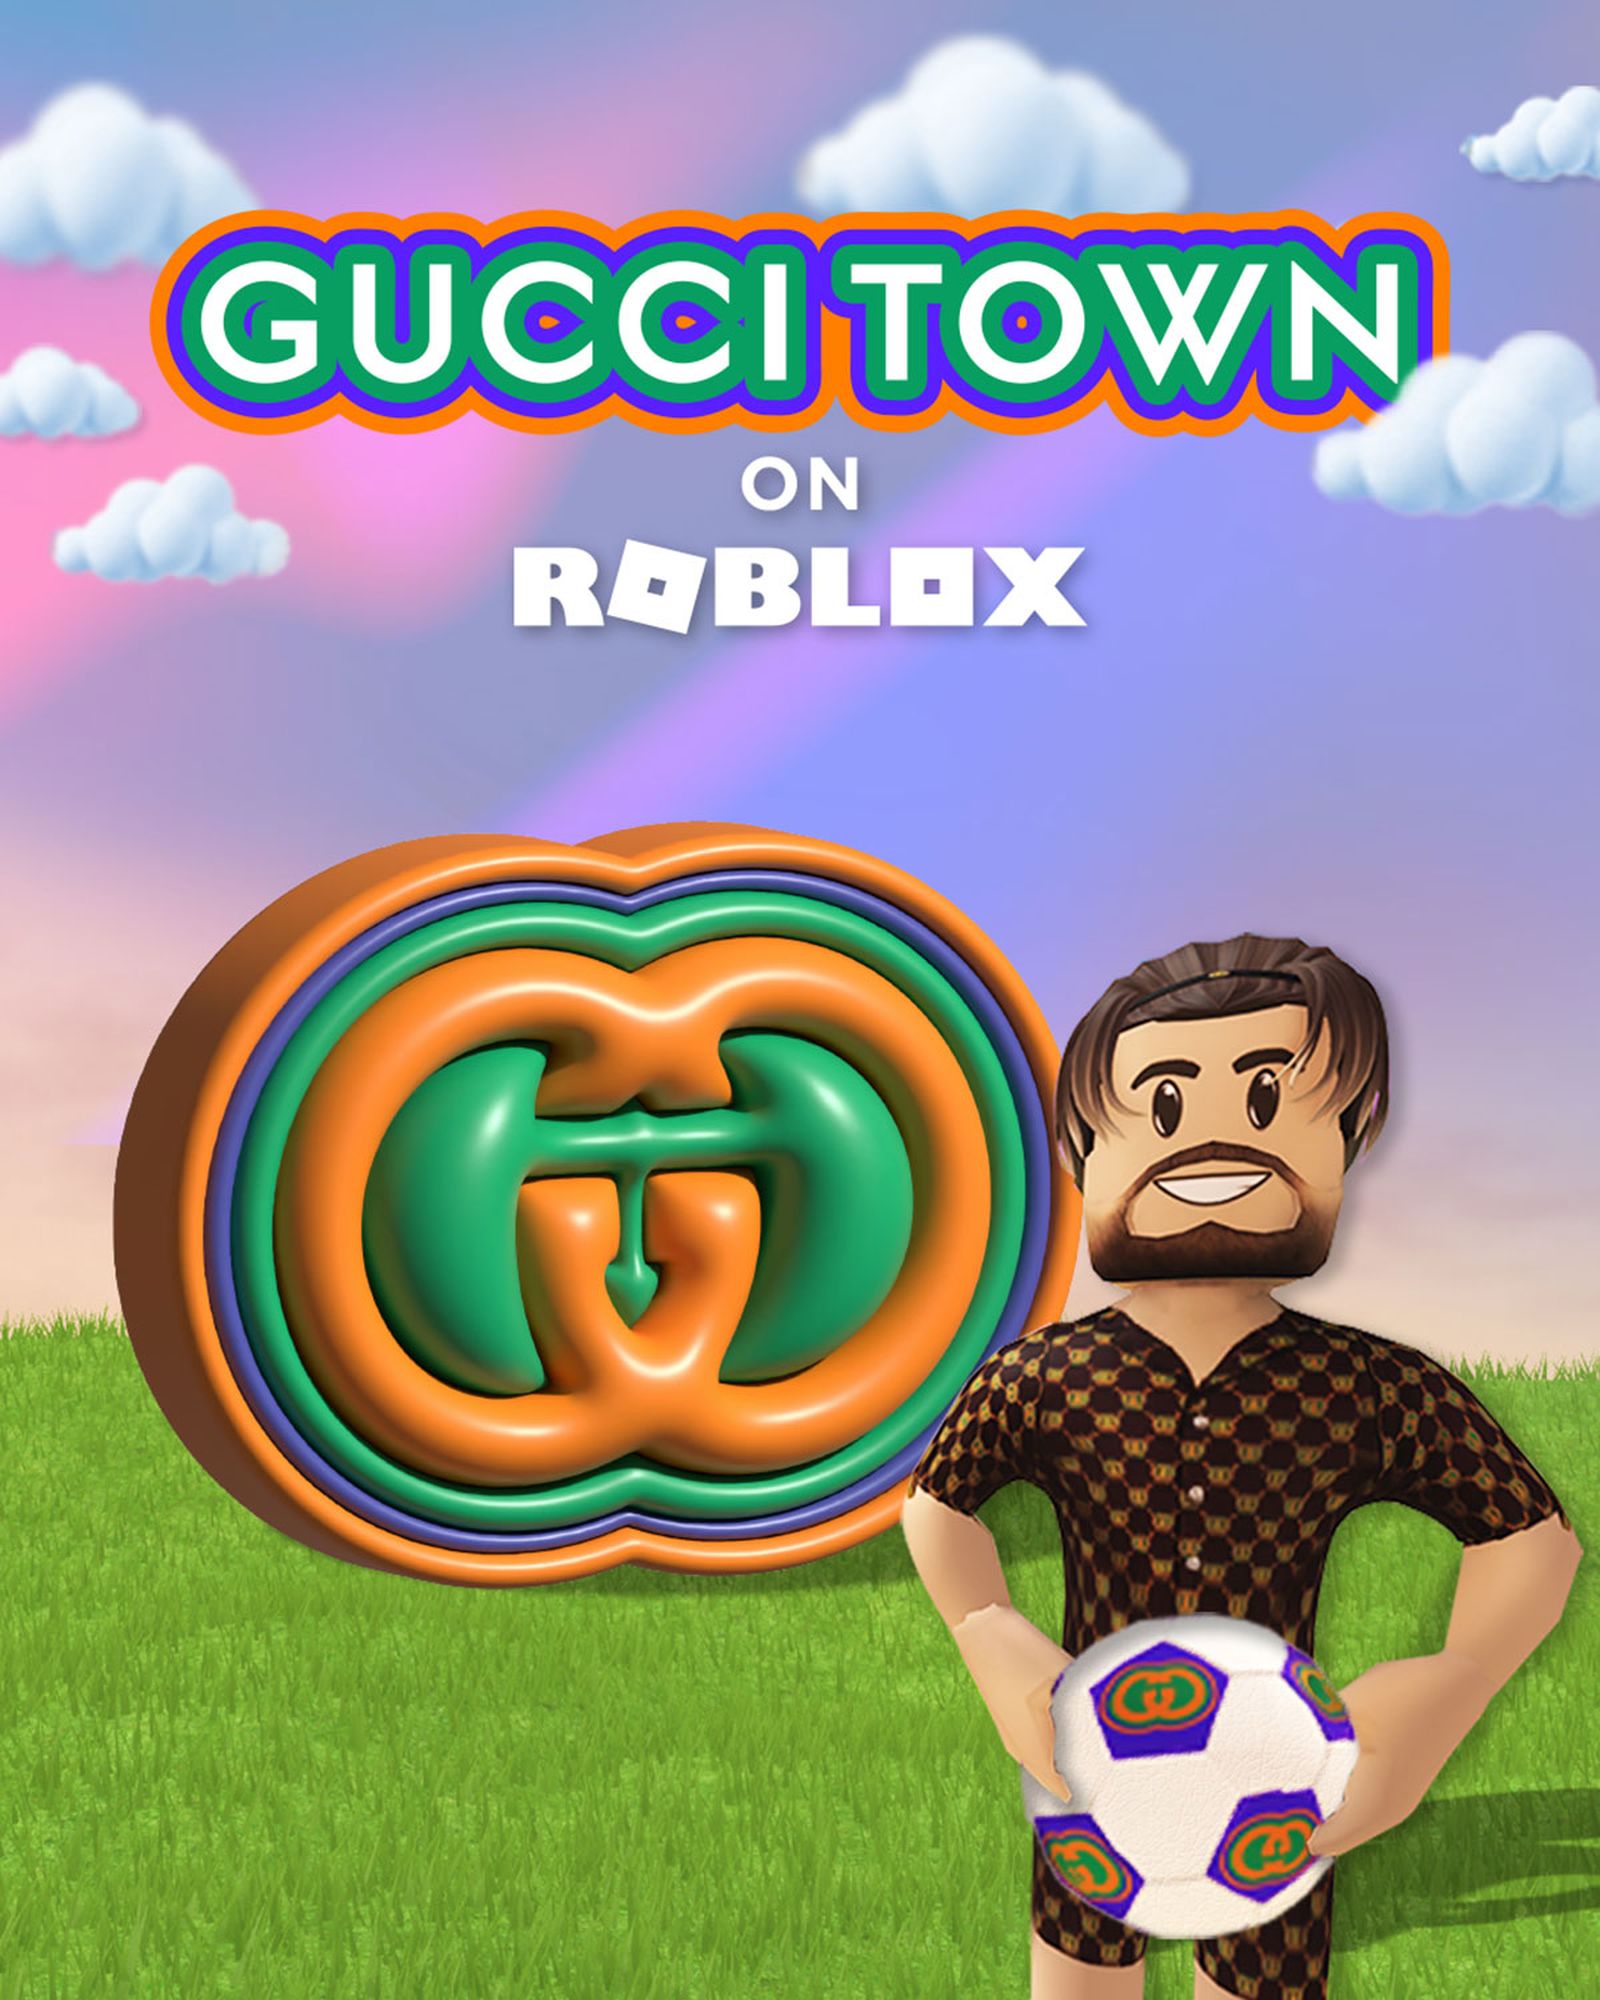 Gucci-town-Roblox-Jack-Grealish-5